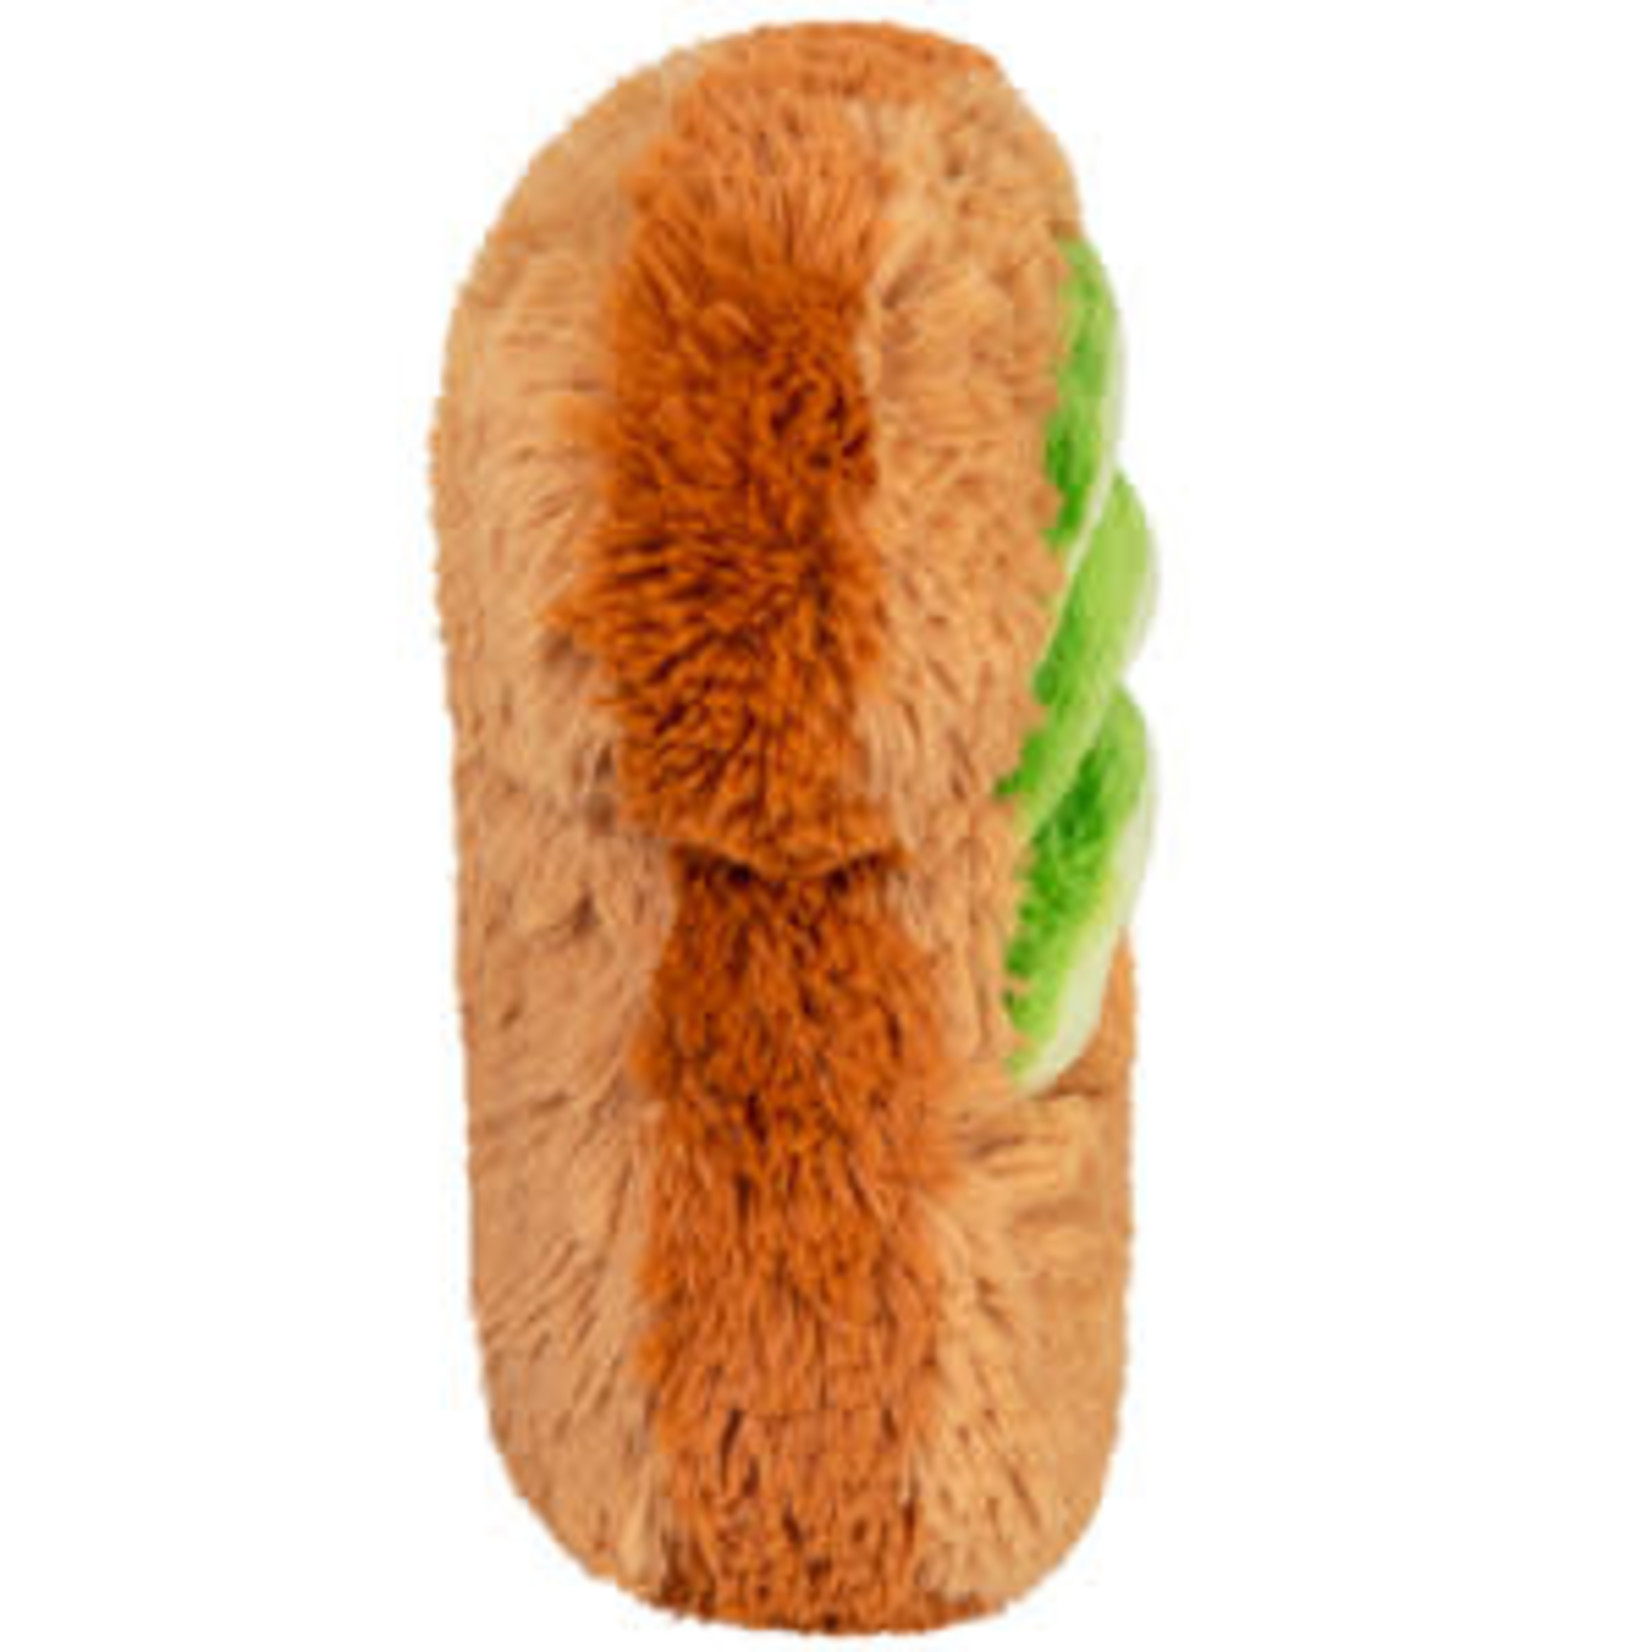 Squishable Mini: Avocado Toast